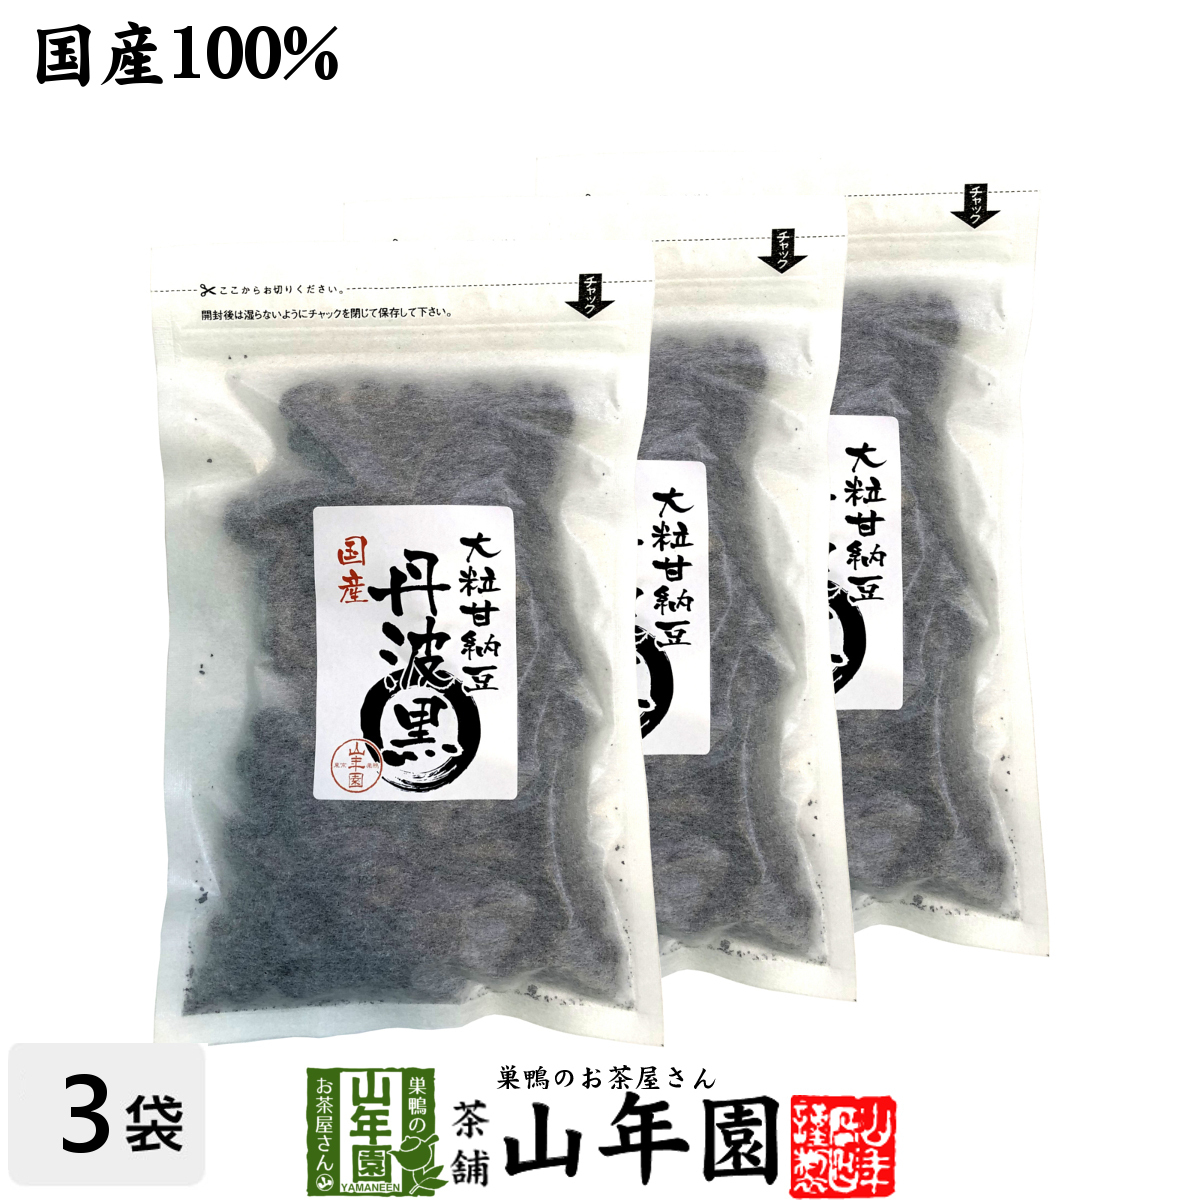  domestic production large grain sugared natto Tanba black 200g×3 sack set free shipping 